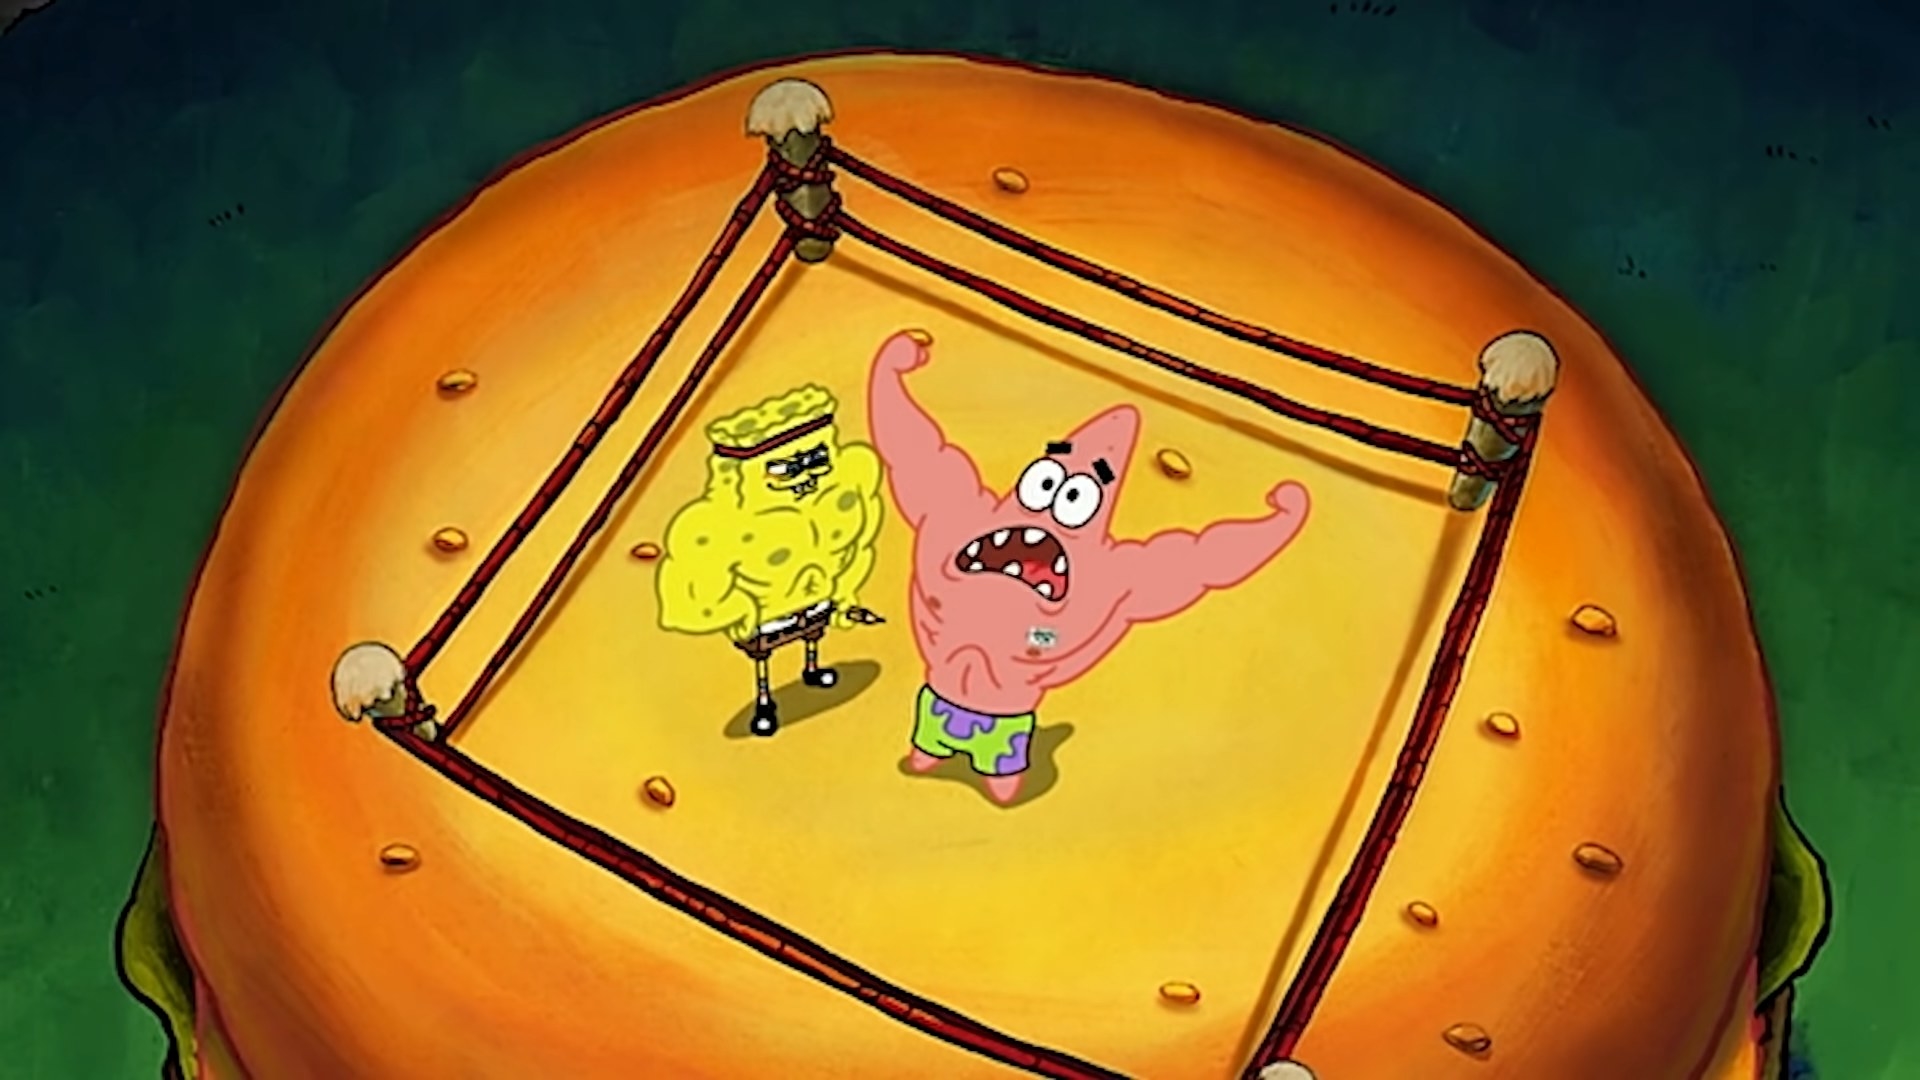 Patrick Star and Spongebob Squarepants wrestling